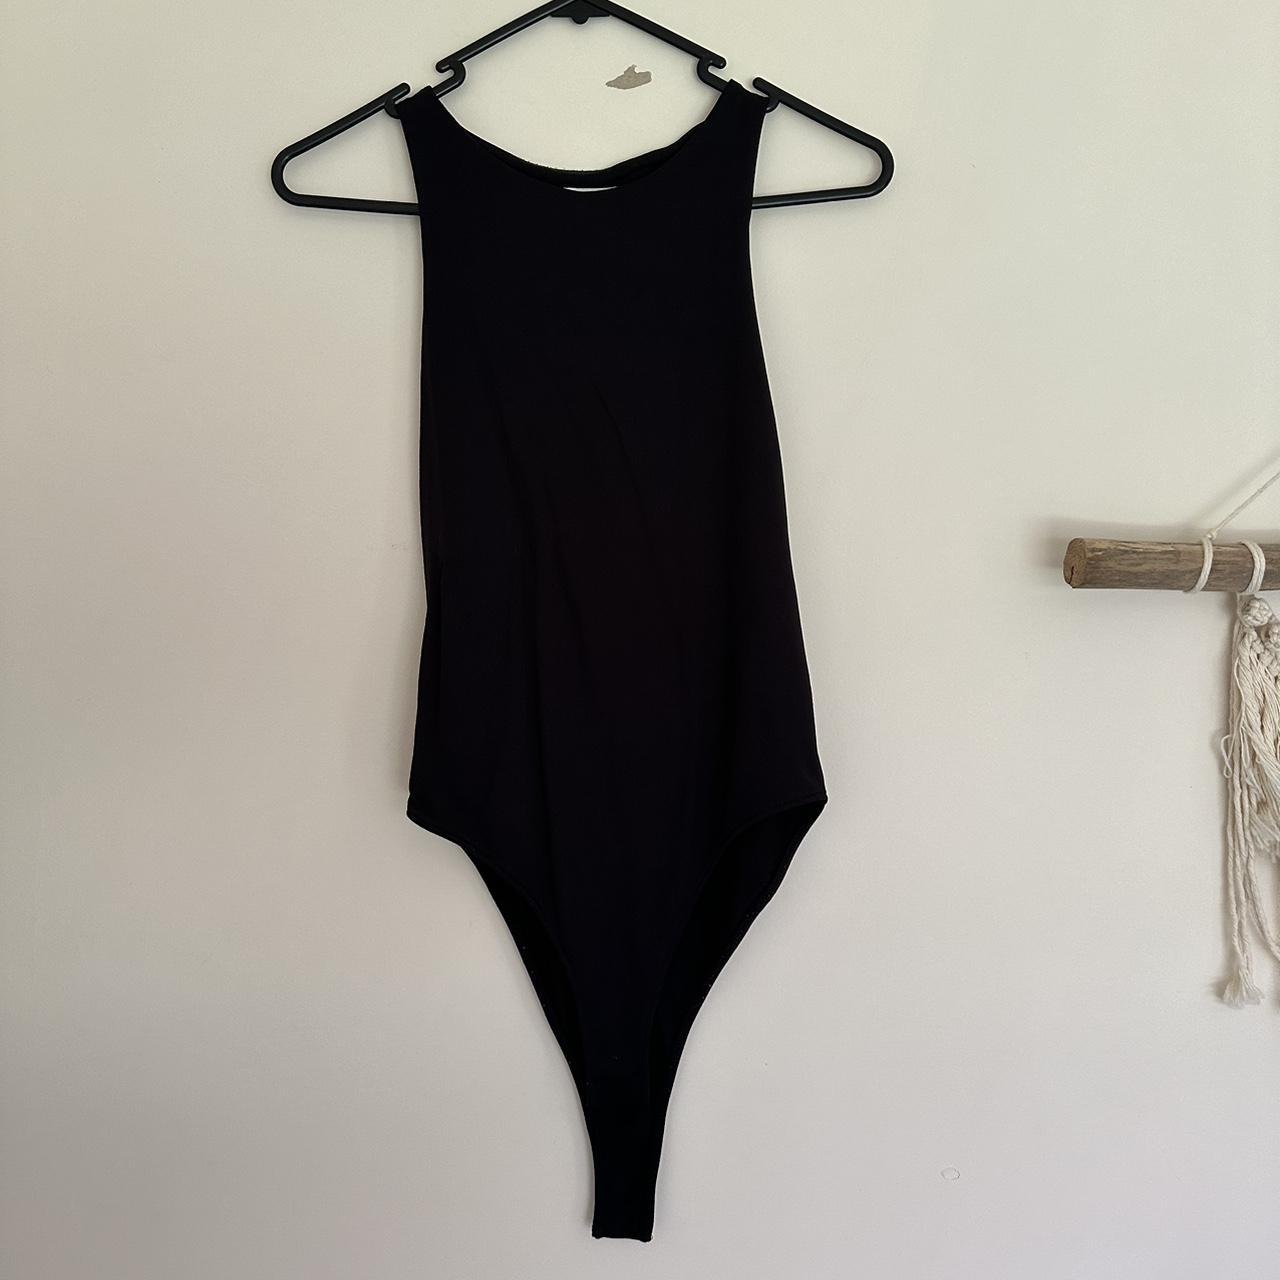 Zara black bodysuit 🖤 Size 10/M Bought from the... - Depop